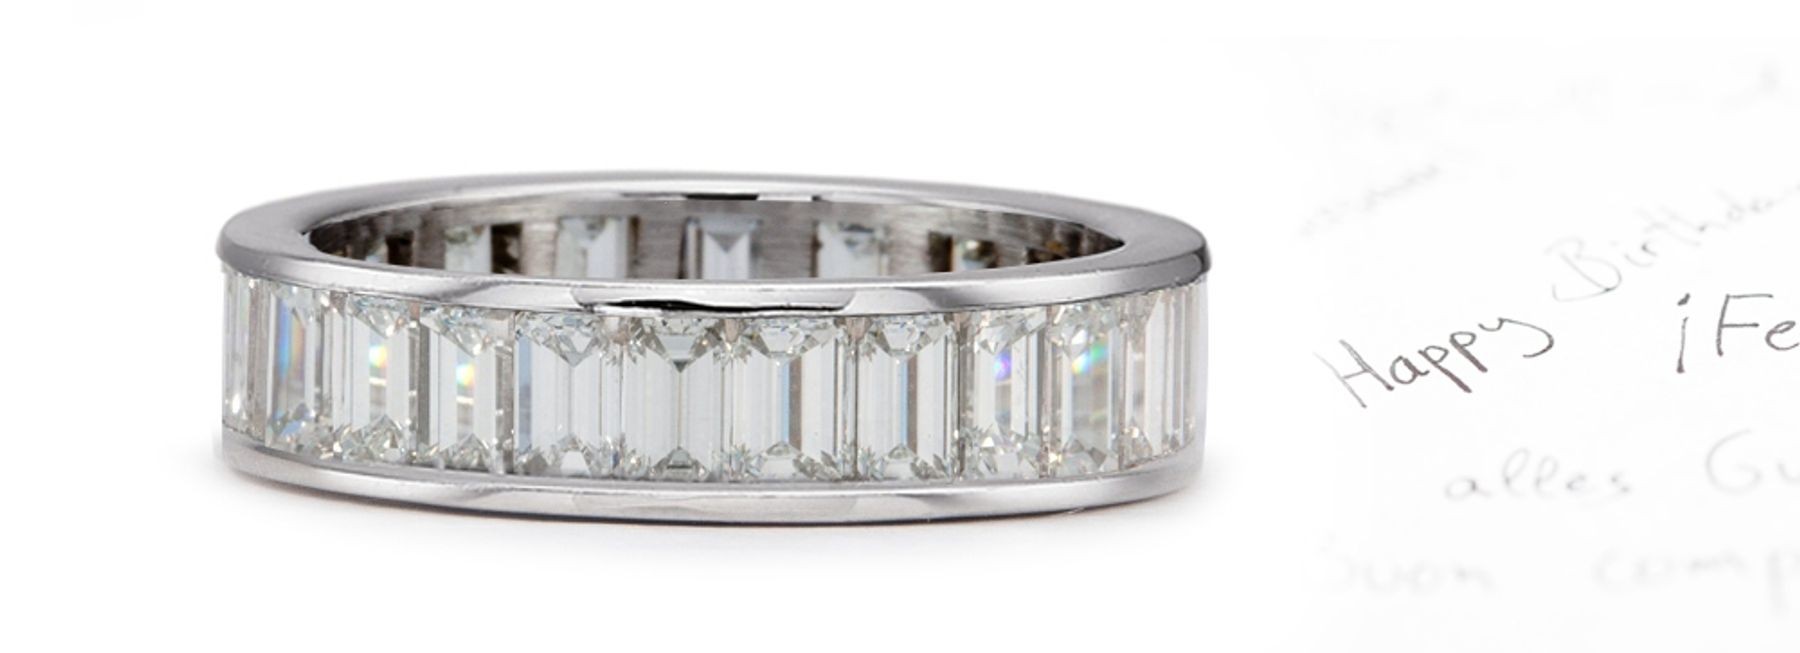 Original Designs: Exceptional Emerald Cut Diamonds Nested Channel Set Between Raised Borders